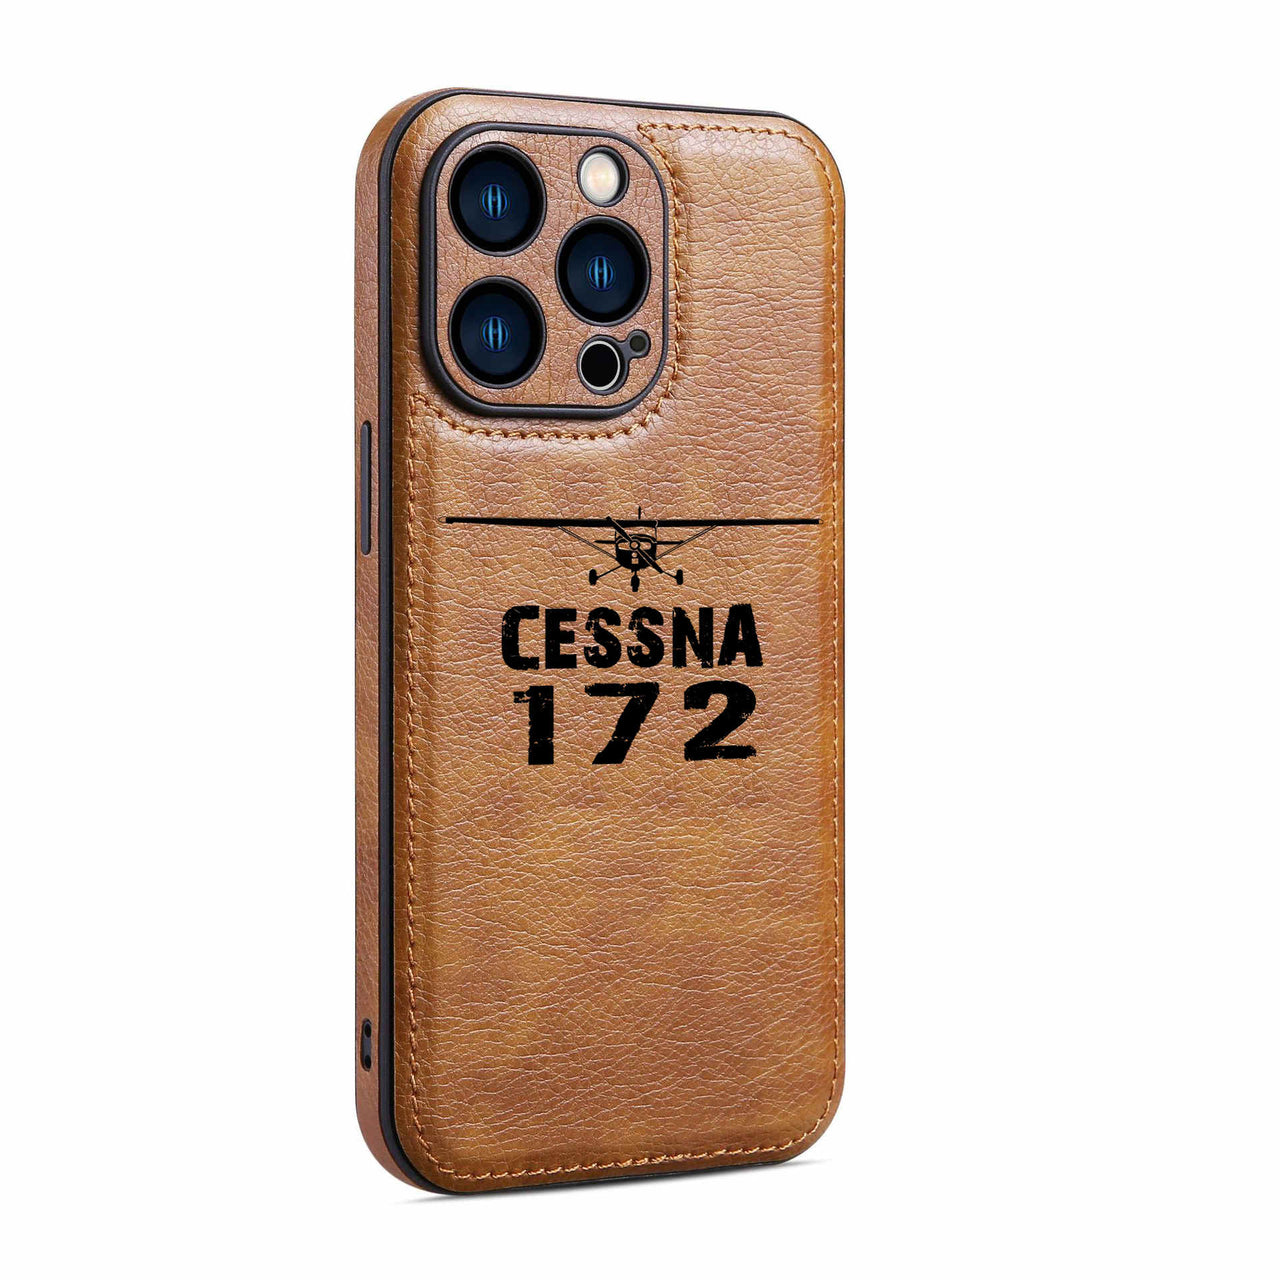 Cessna 172 & Plane Designed Leather iPhone Cases